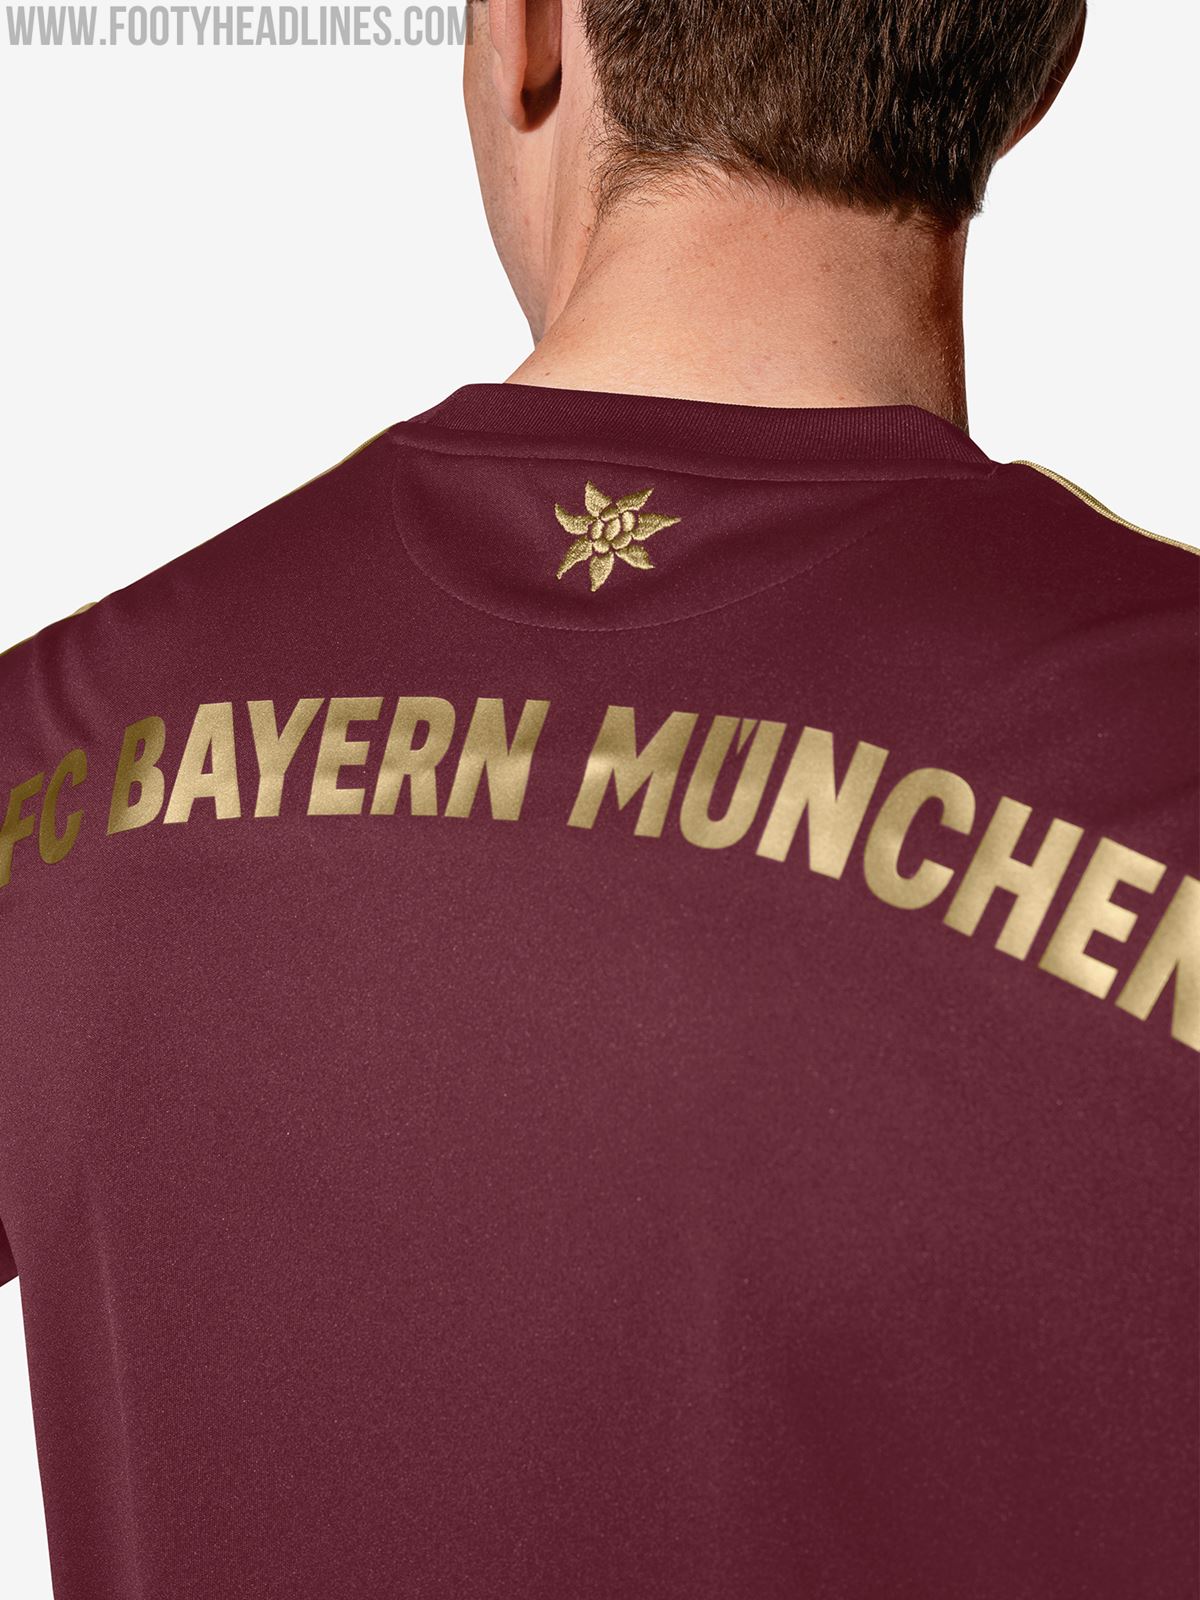 Bayern München 22-23 Olympiastadion Kit Released - Footy Headlines